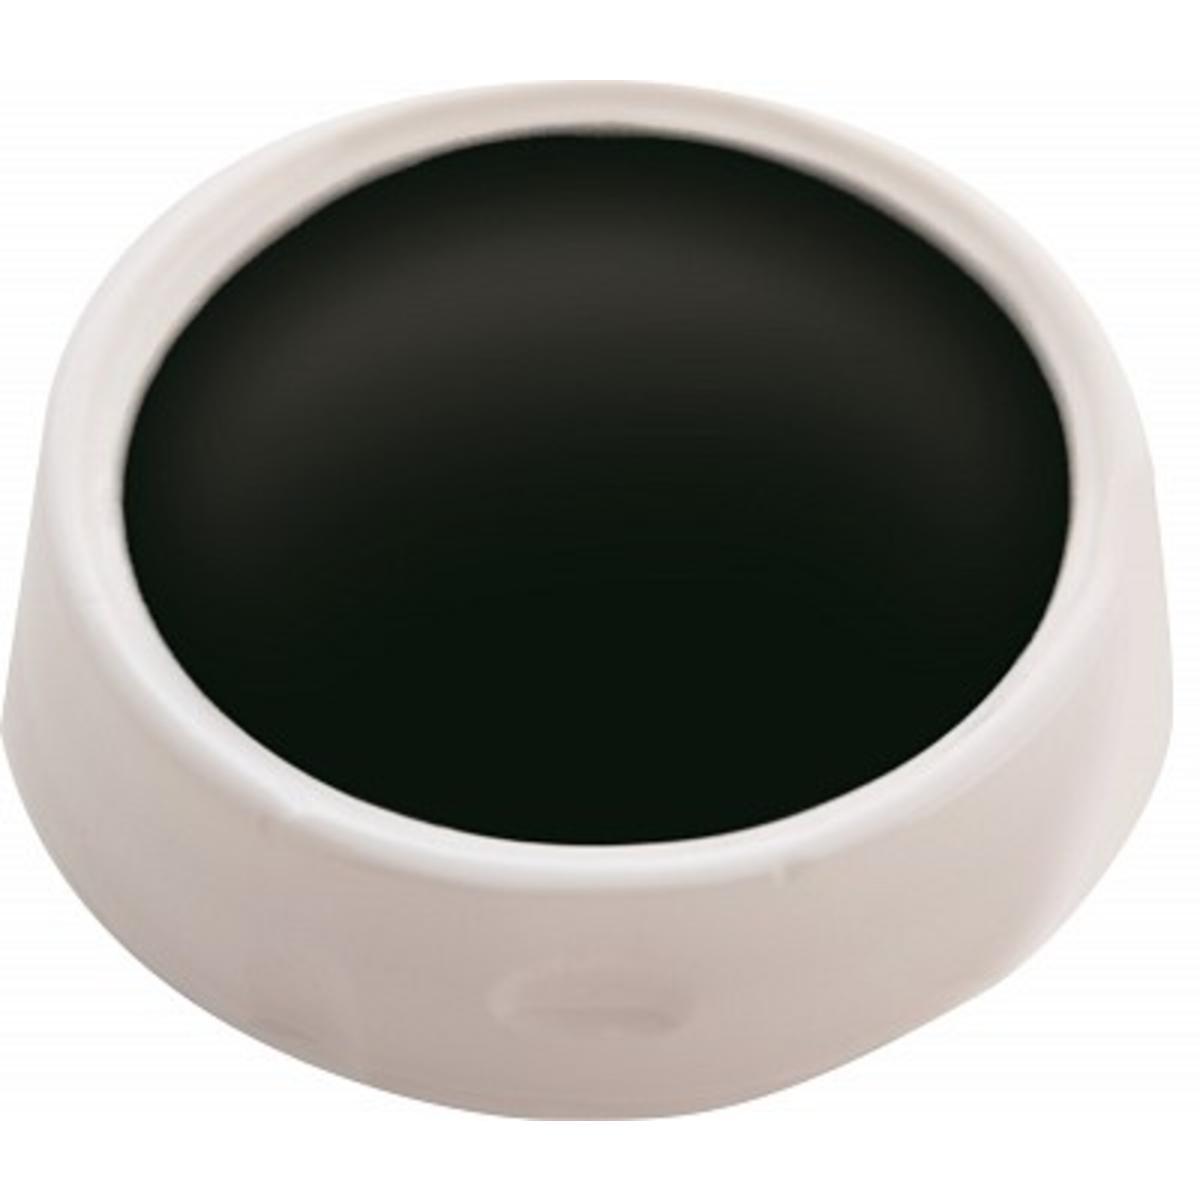 Palette ronde en fard gras - 6,5 x 6,5 cm - Noir